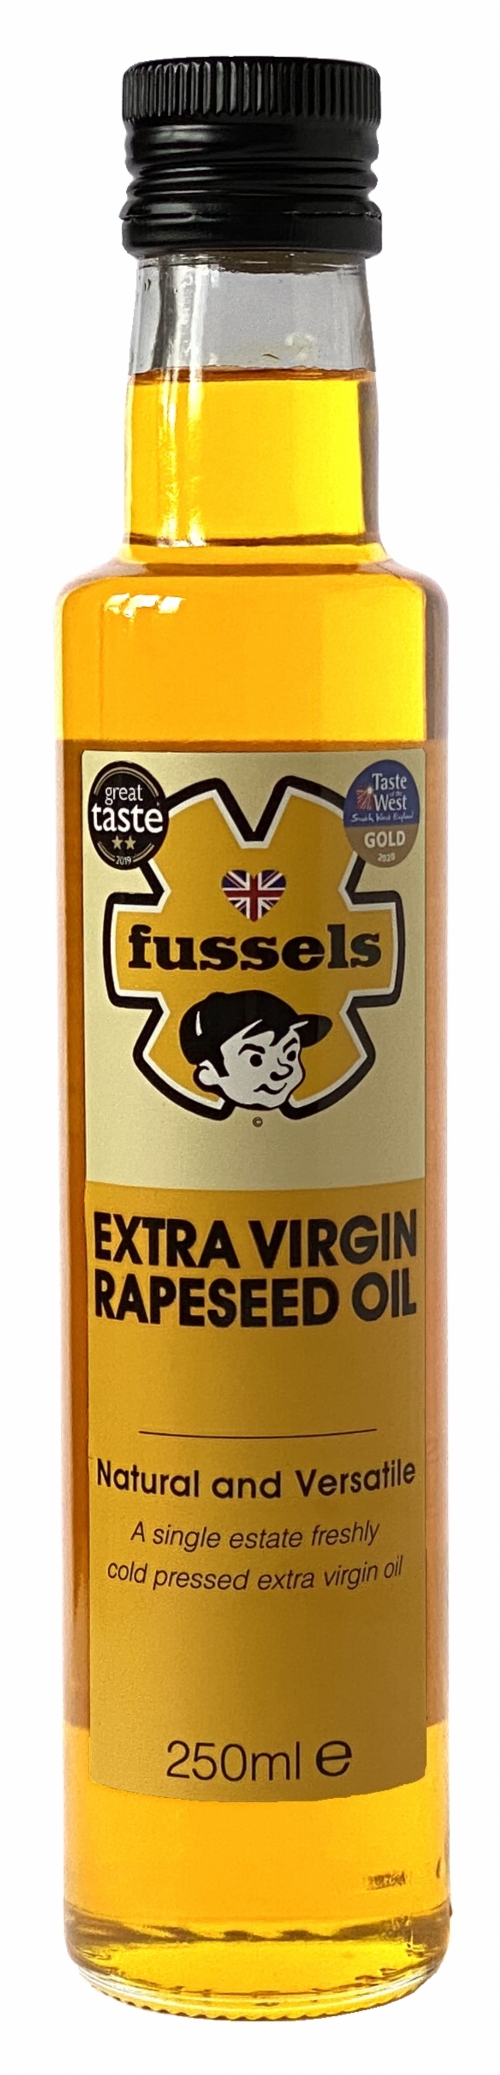 FUSSELS Extra Virgin Rapeseed Oil 250ml